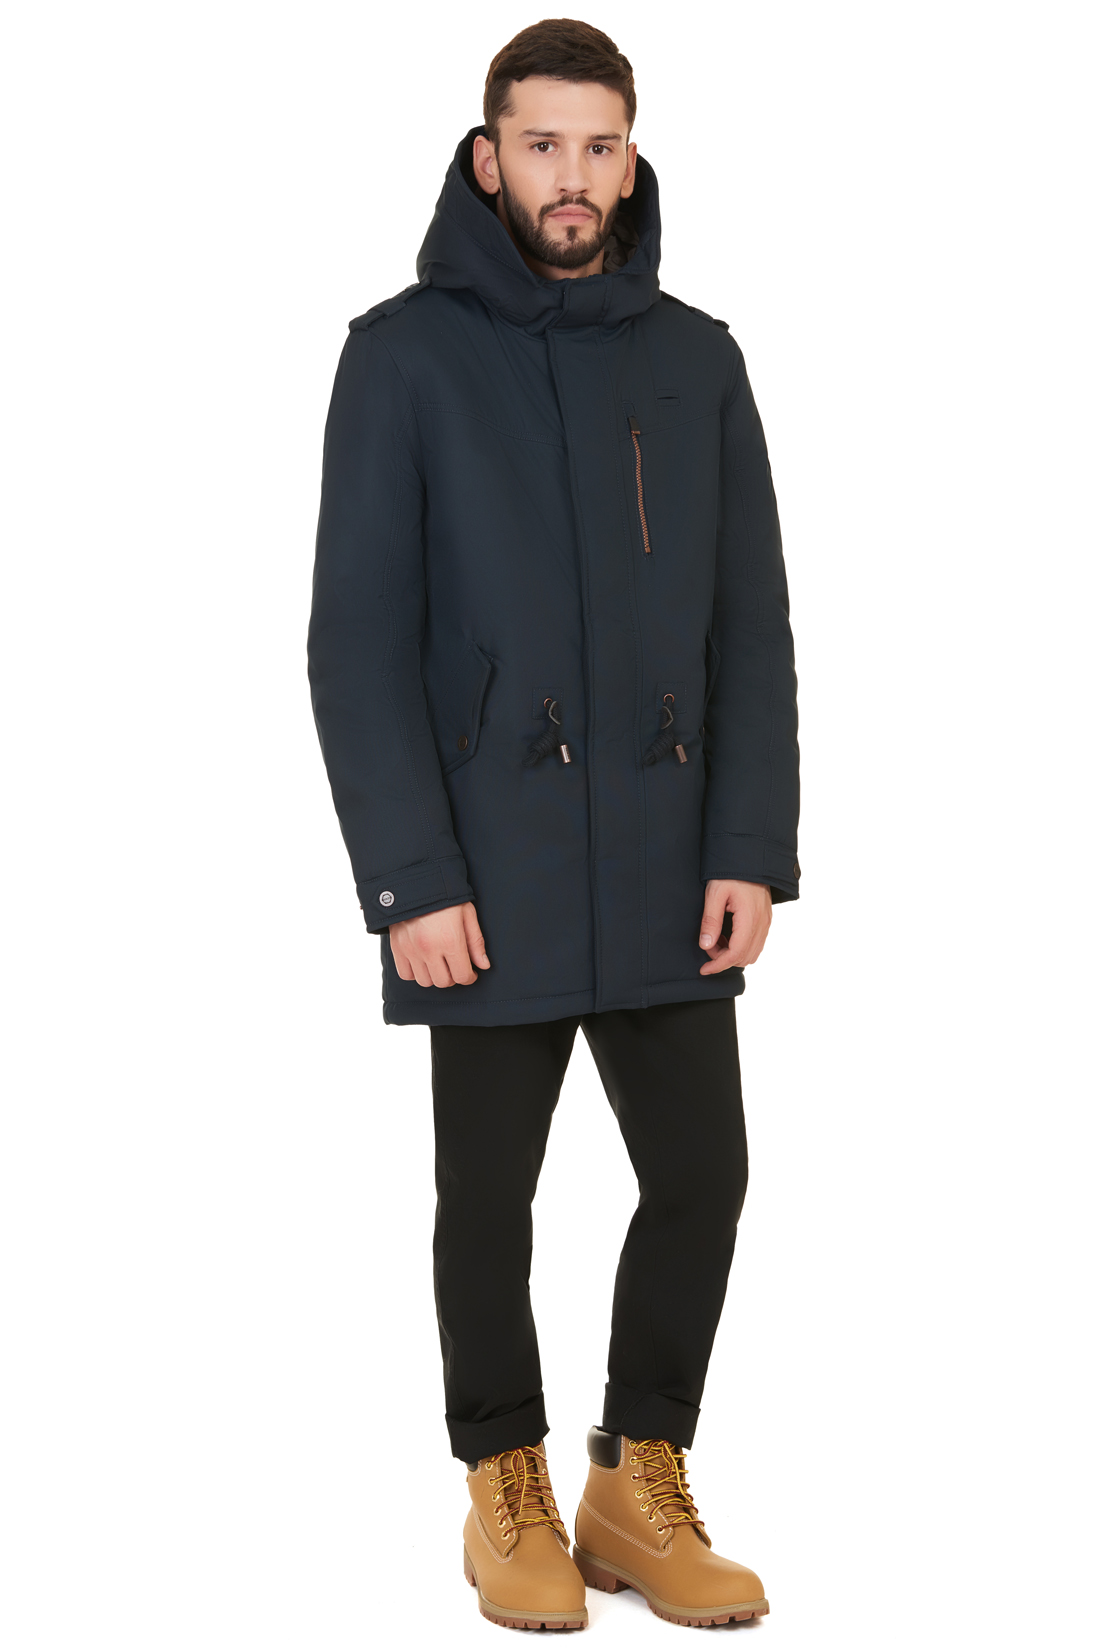 Удлинённая куртка-парка (арт. baon B537513), размер XL, цвет синий Удлинённая куртка-парка (арт. baon B537513) - фото 5